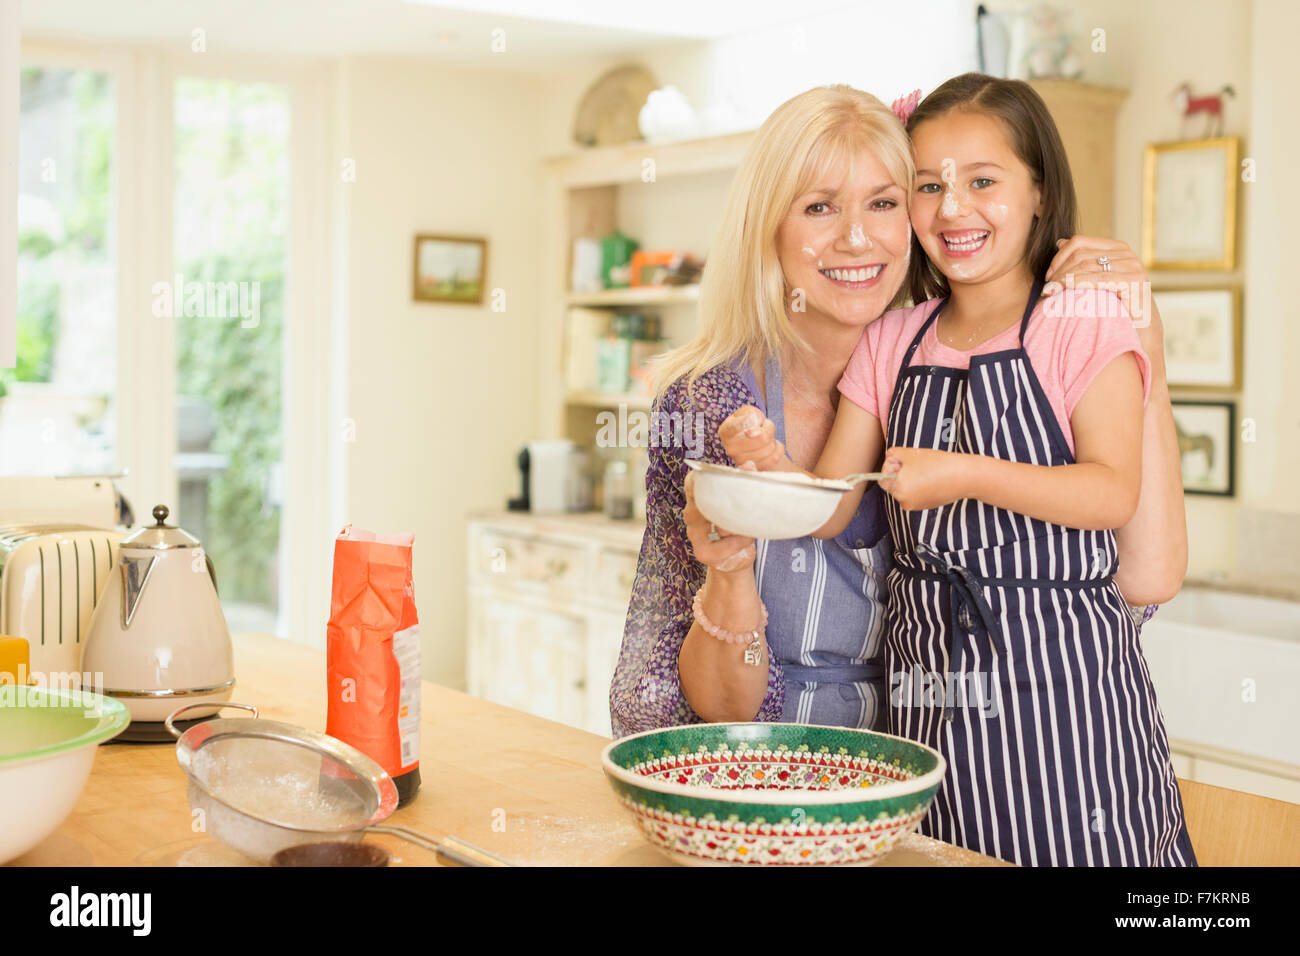 Portrait smiling grandmother and granddaughter baking in kitchen Banque D'Images